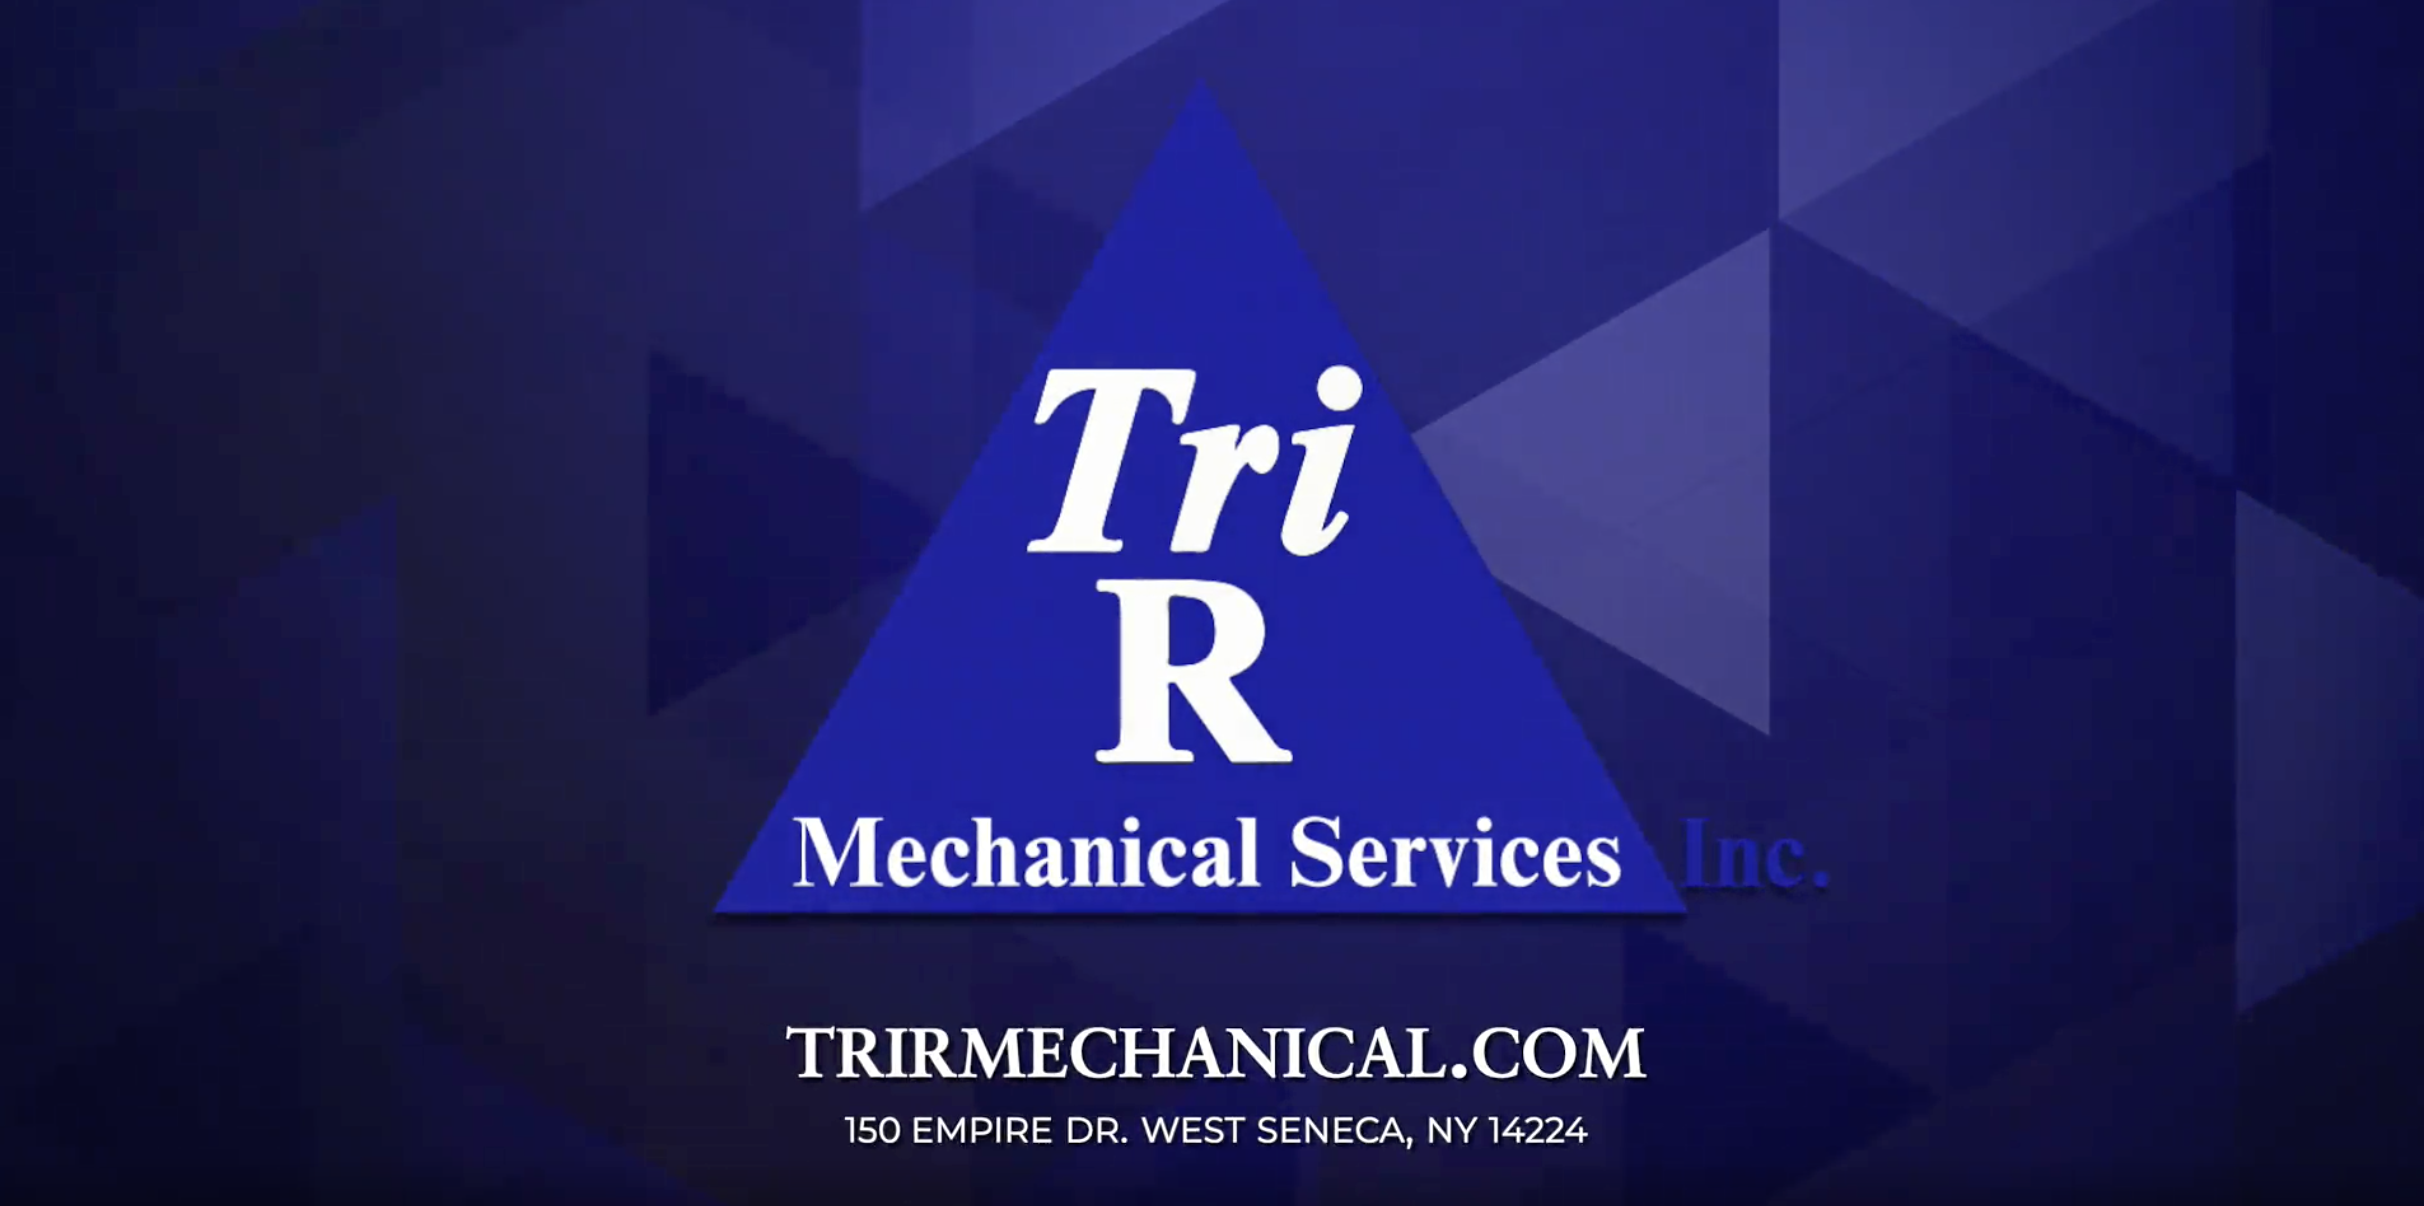 Tri R Mechanical Services